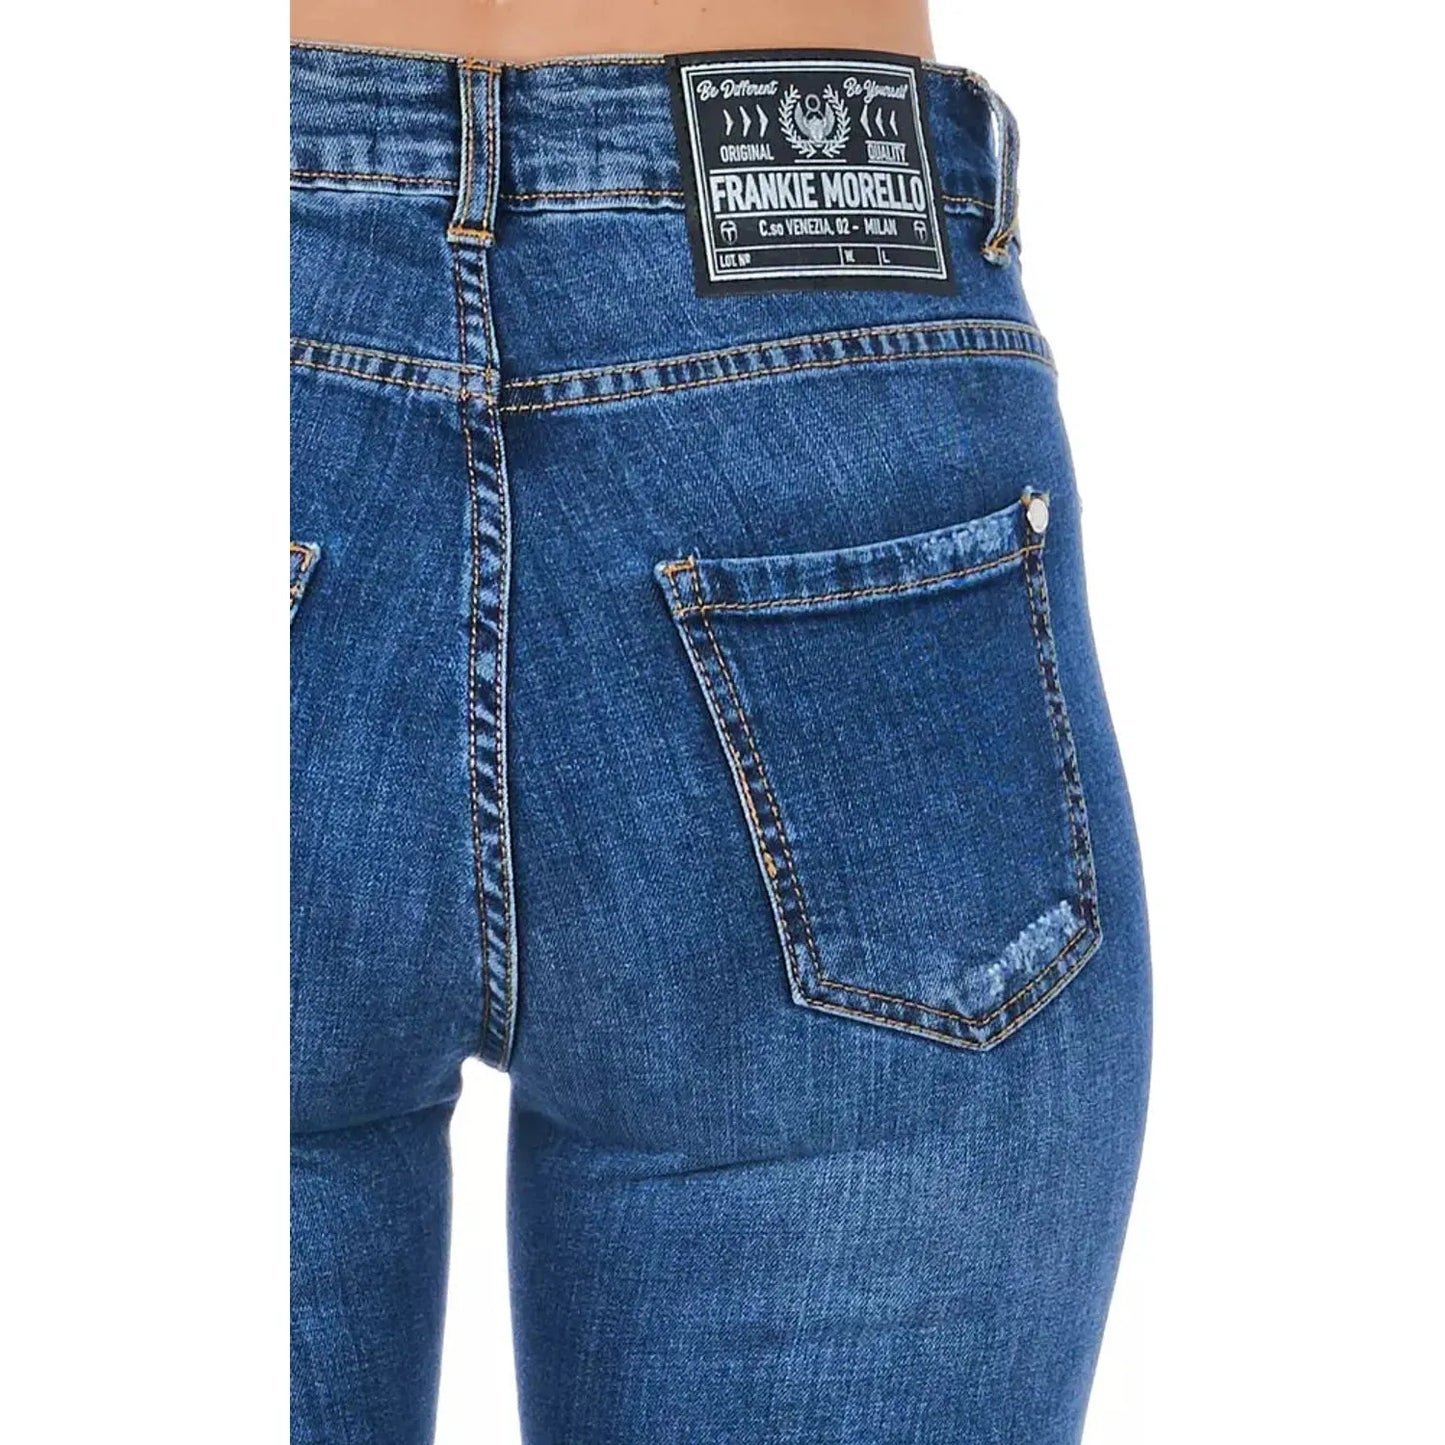 Frankie Morello Stylish Worn Wash Denim Jeans blue-jeans-pant-6 stock_product_image_21770_1111026990-24-6a6a059f-ab2.webp